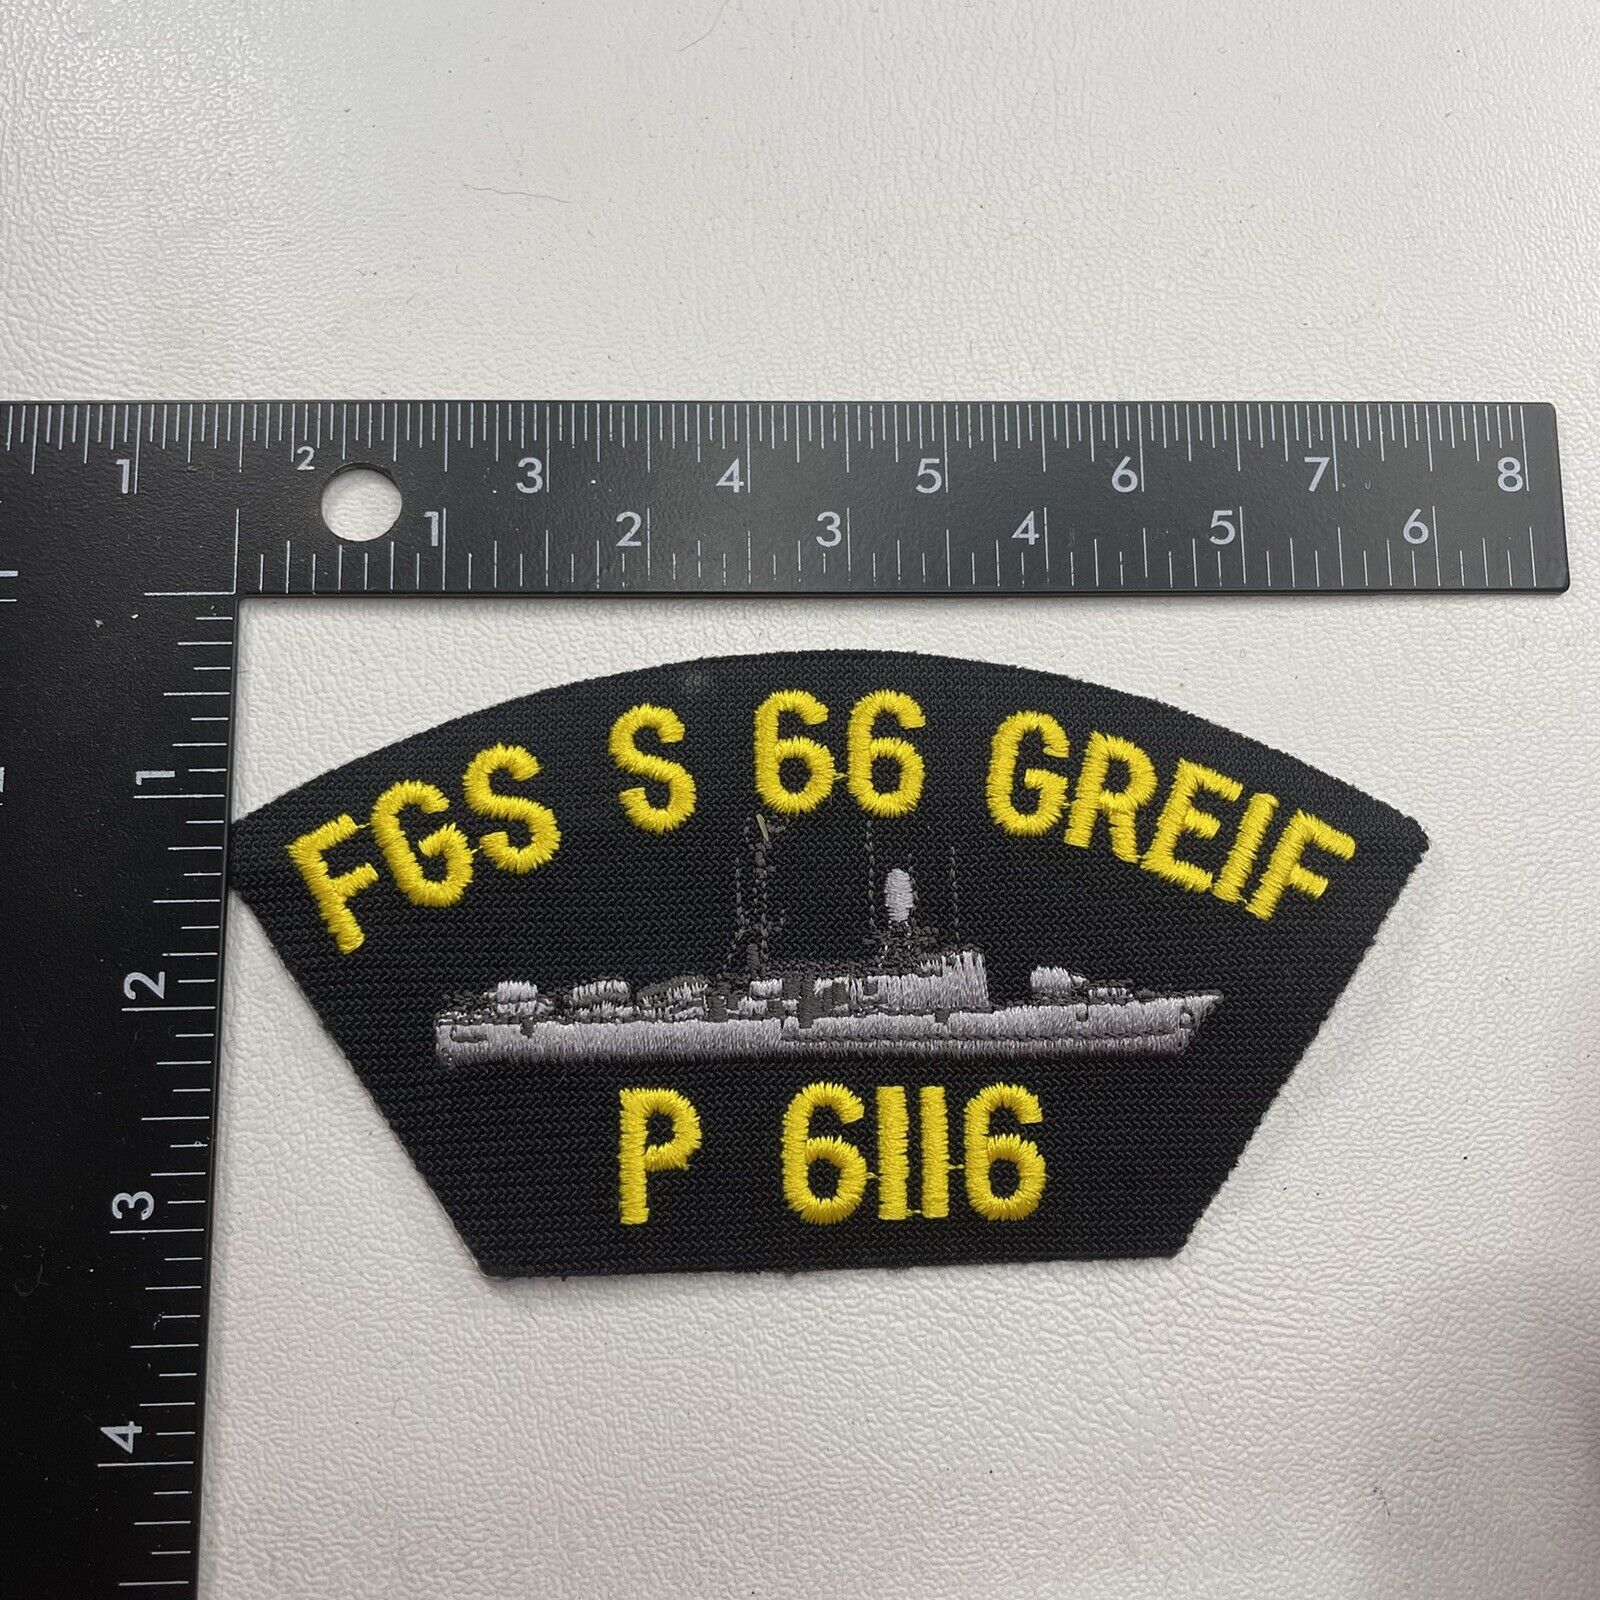 Navy Borderless Hat Patch FGS S 66 GREIF P 6166 26TU